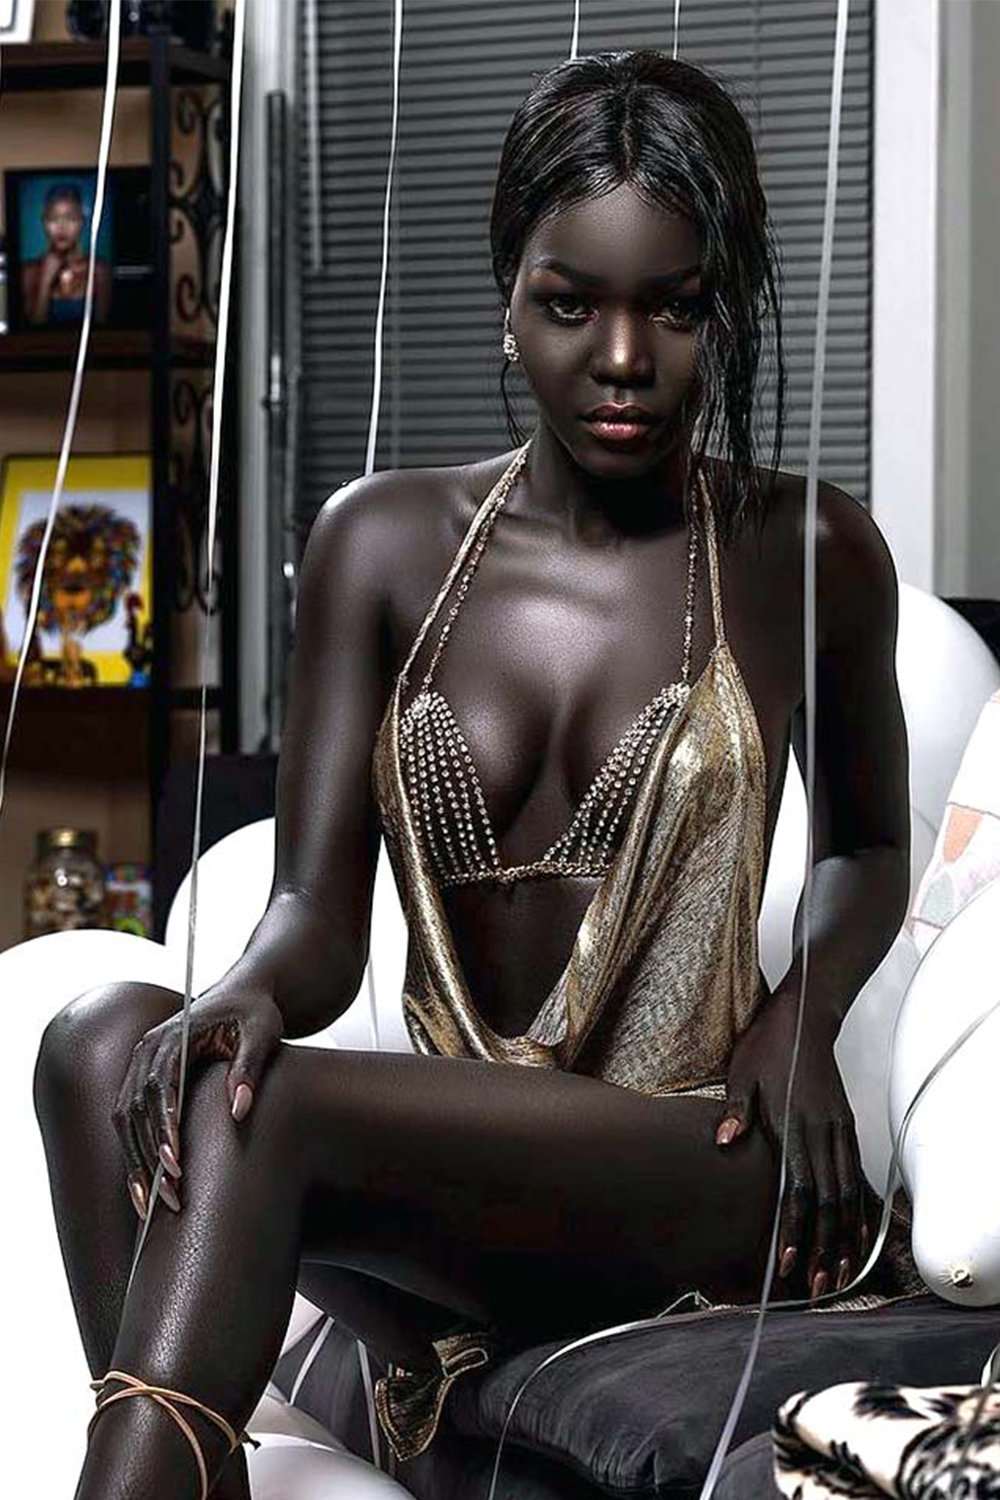 Негритянка течет. Няким Гатвеч. Нуаким Гатвеч модель из Южного Судана. Королева тьмы модель из Южного Судана Ньяким. Nyakim Gatwech (Ньяким Гатвеч) - 24-летняя модель.